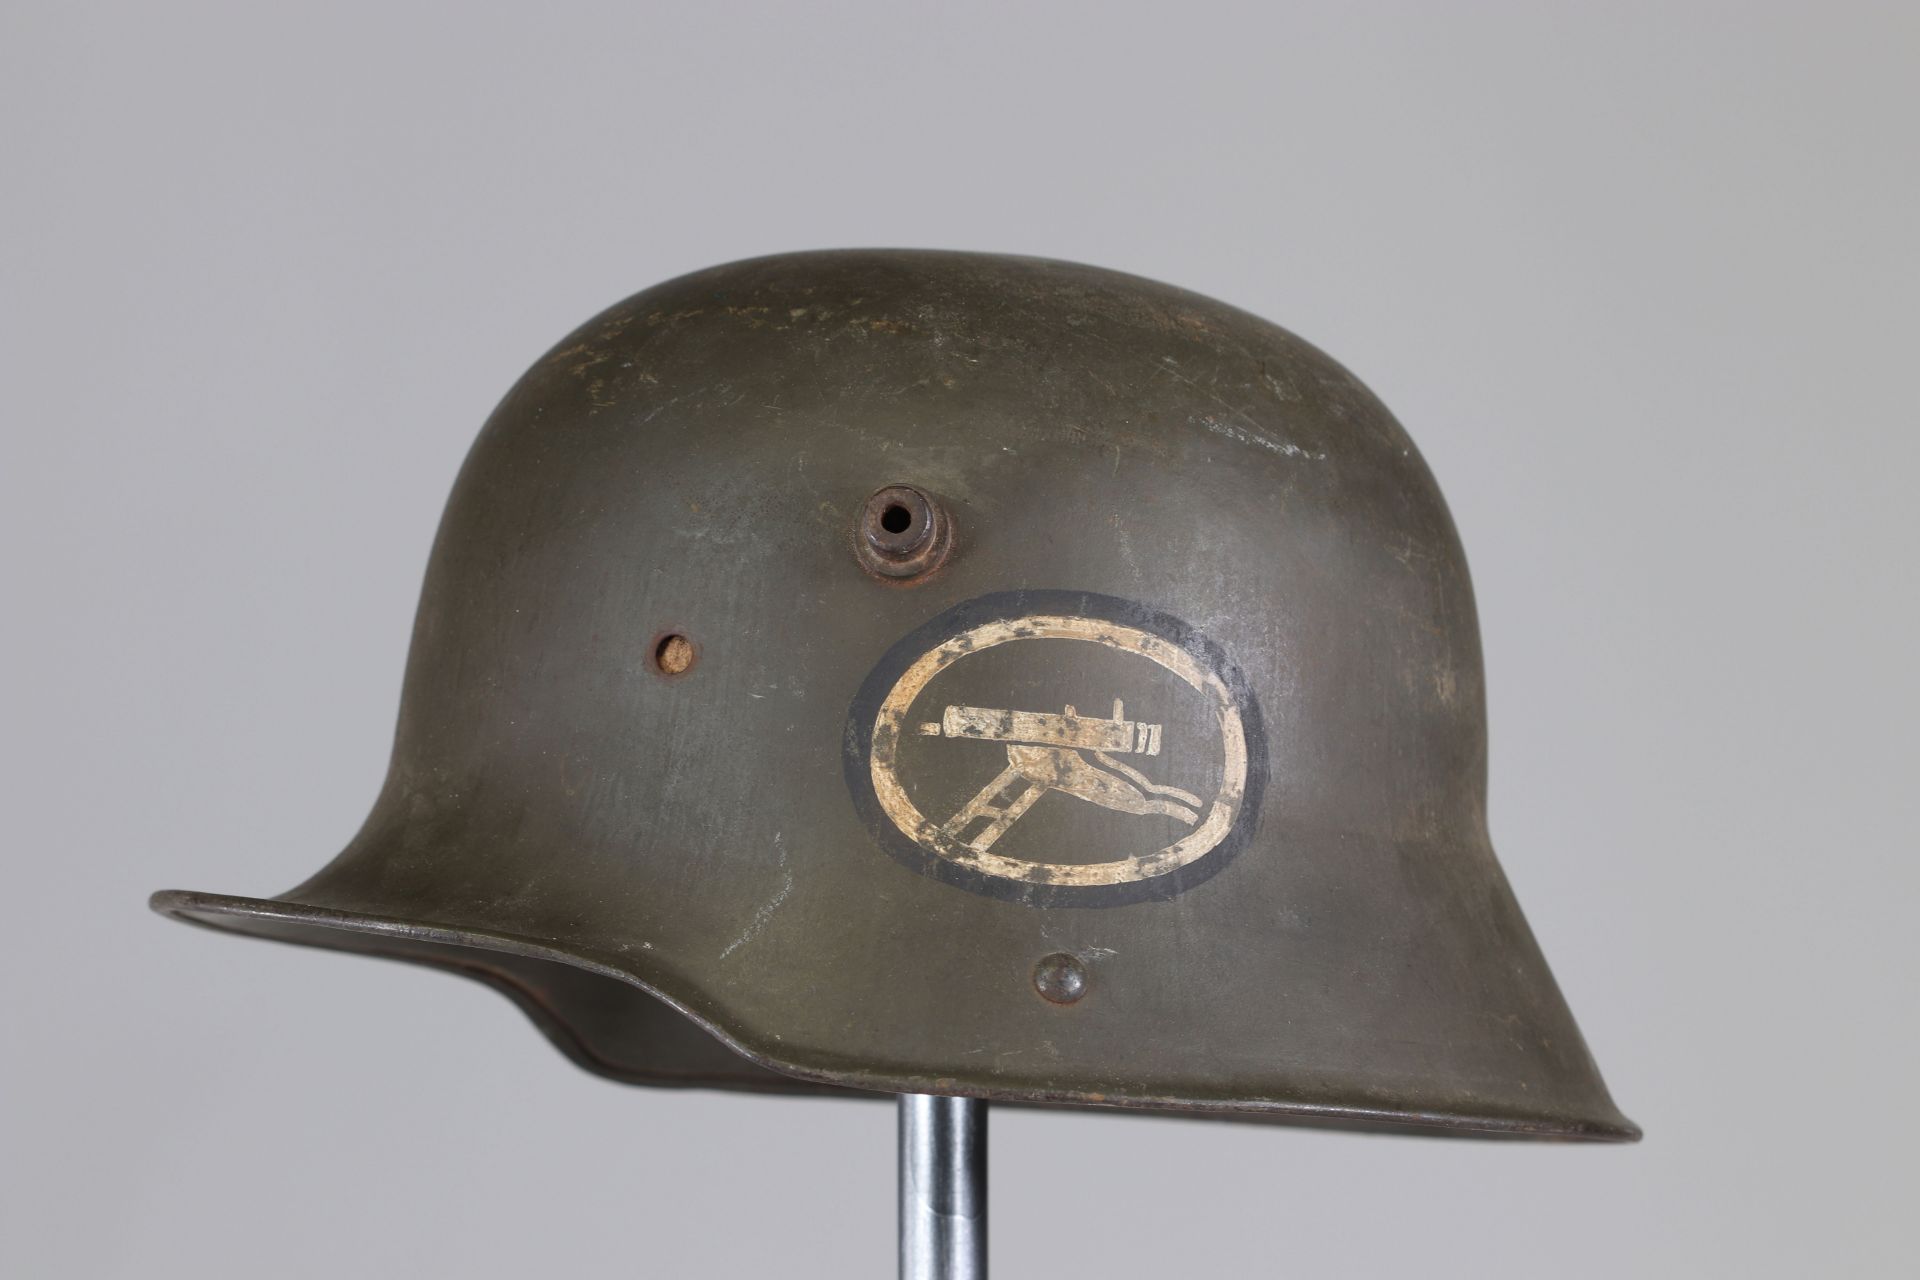 Germany ww1 helmet with Mitralleur cocorde - Image 3 of 5